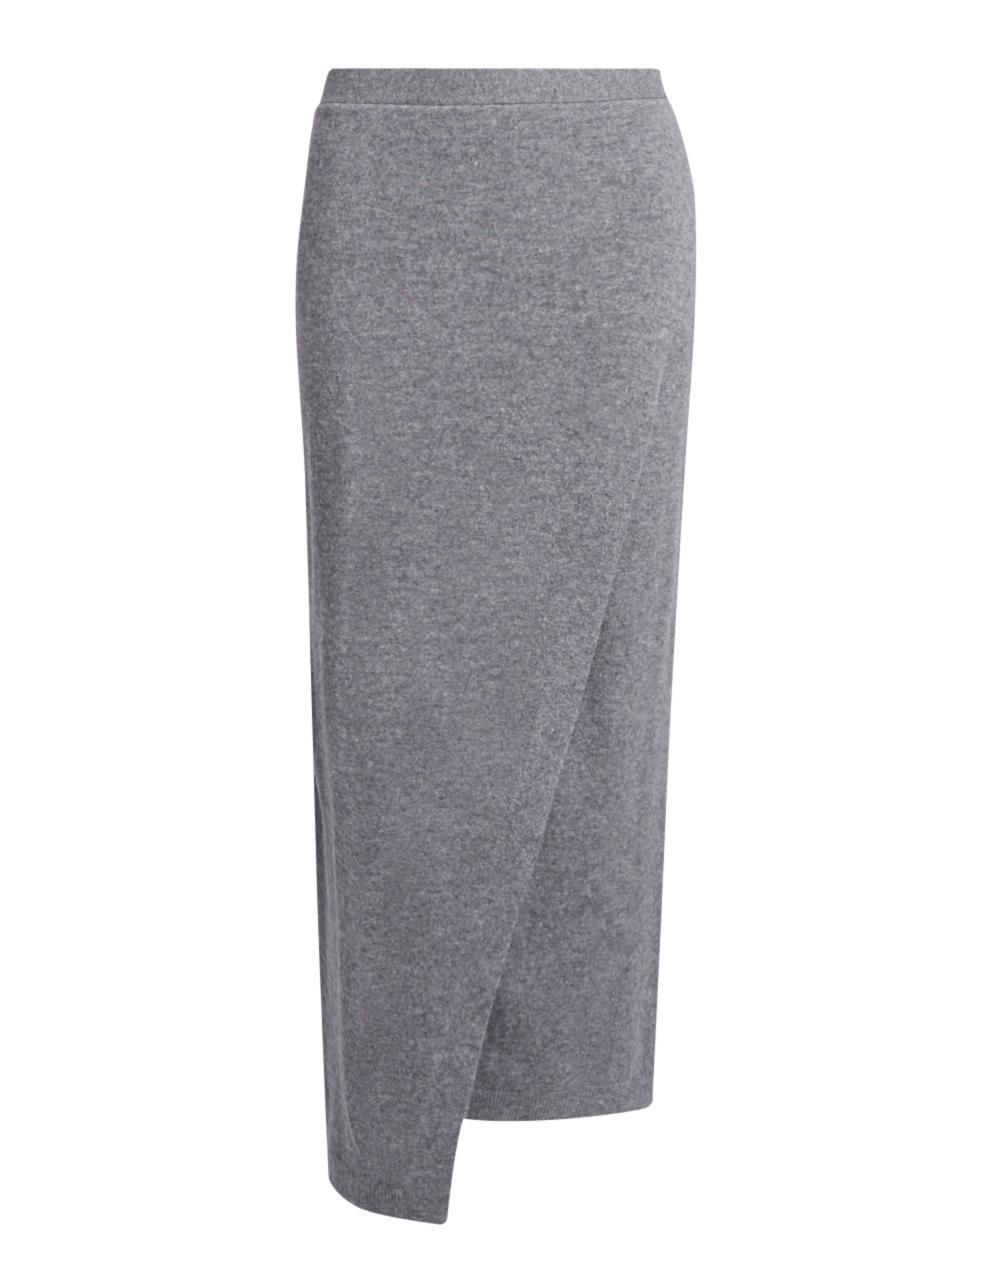 Lyst - Joseph Soft Wool Wrap Skirt in Gray